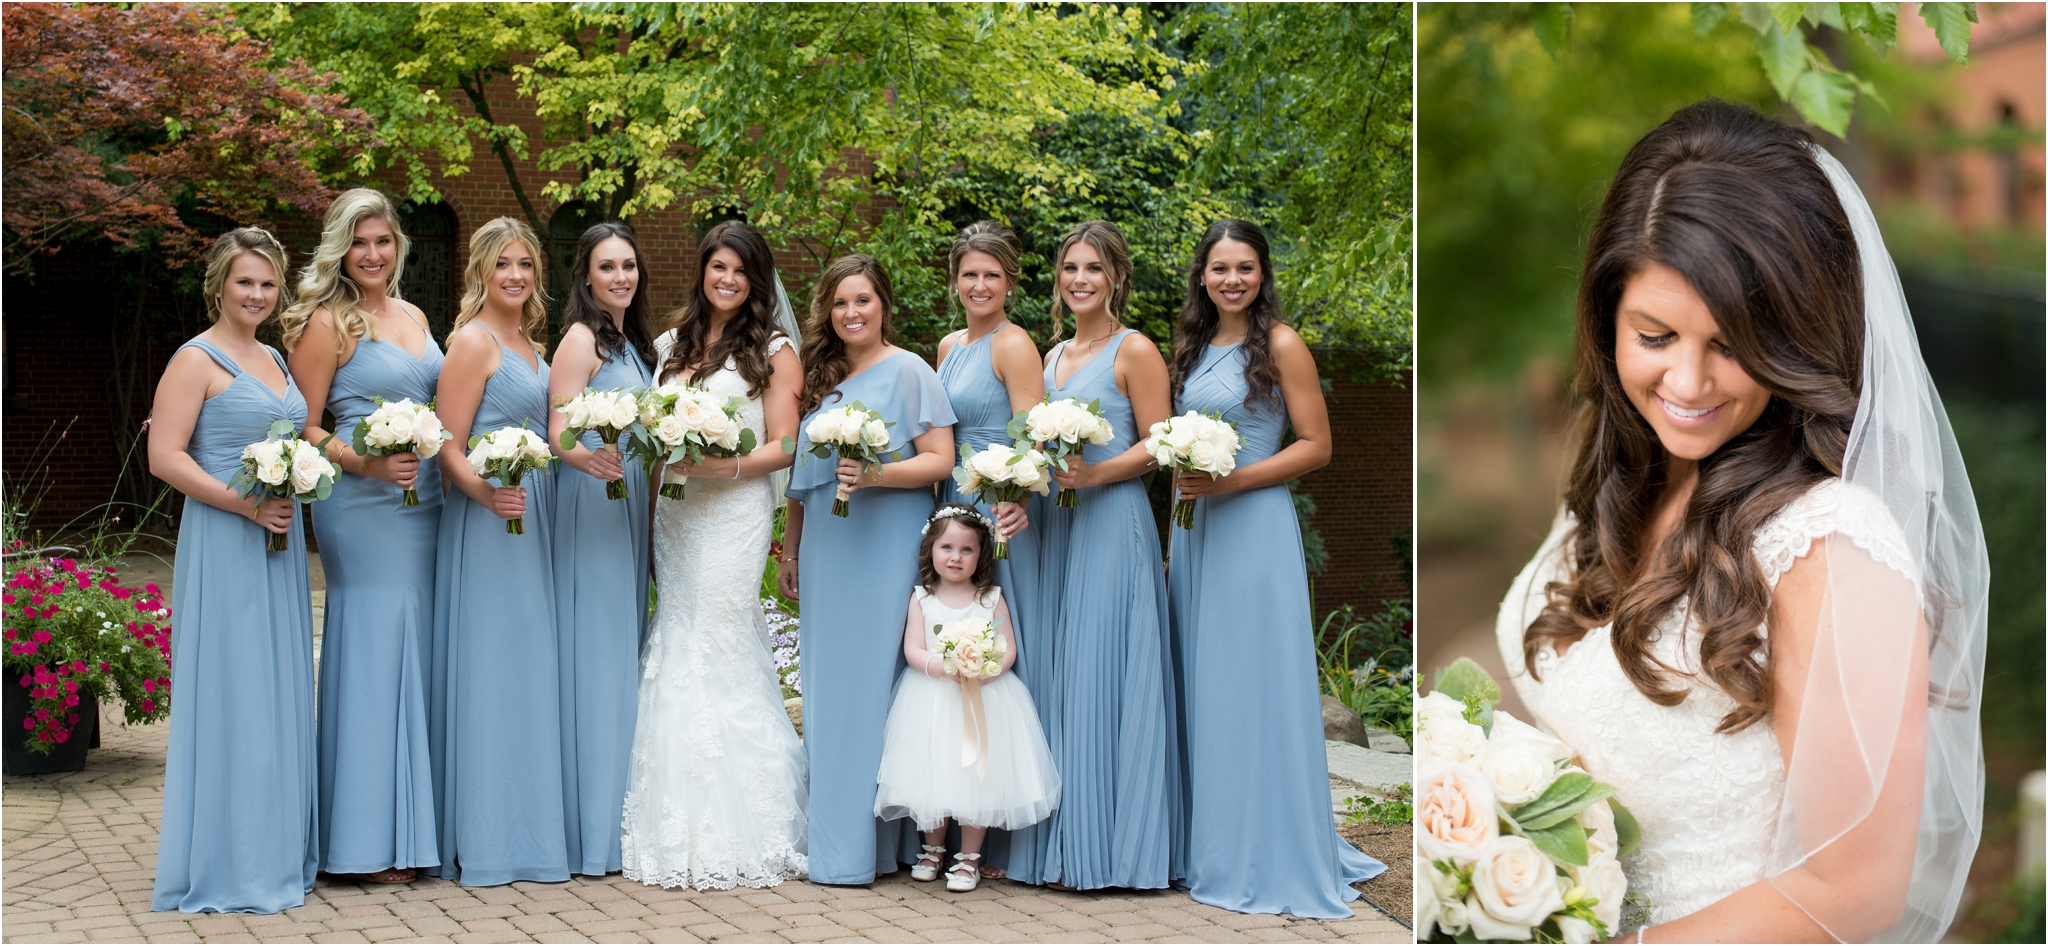 The Inn at St. Johns | Sarah & Rachel Wedding Photographers | plymouth, Mi wedding | blue bridesmaids dresses